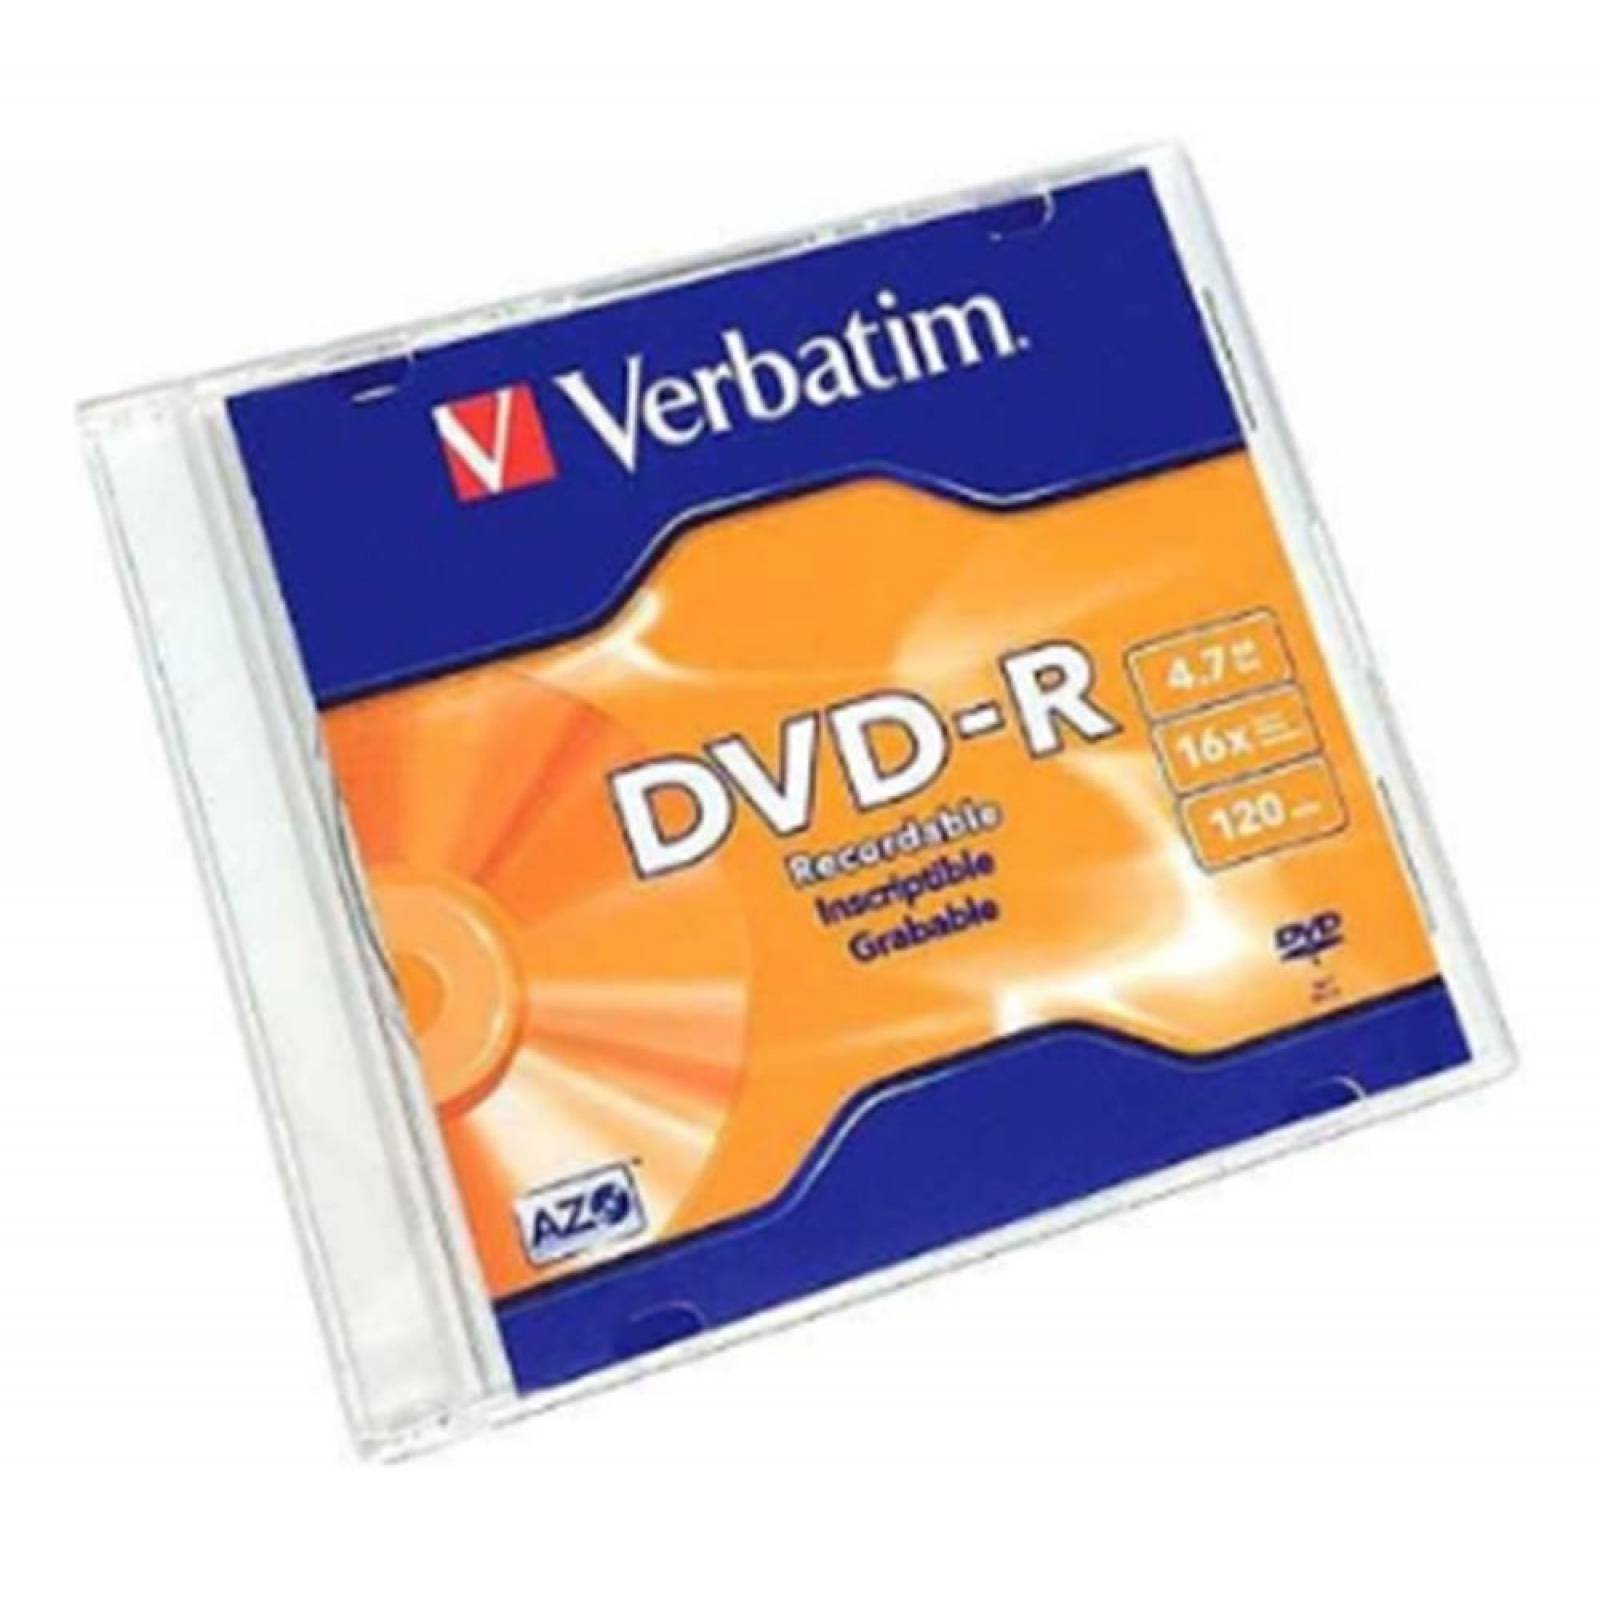 DVD-R VERBATIM EN ESTUCHE 4.7GB 16X 120MIN VB95093 